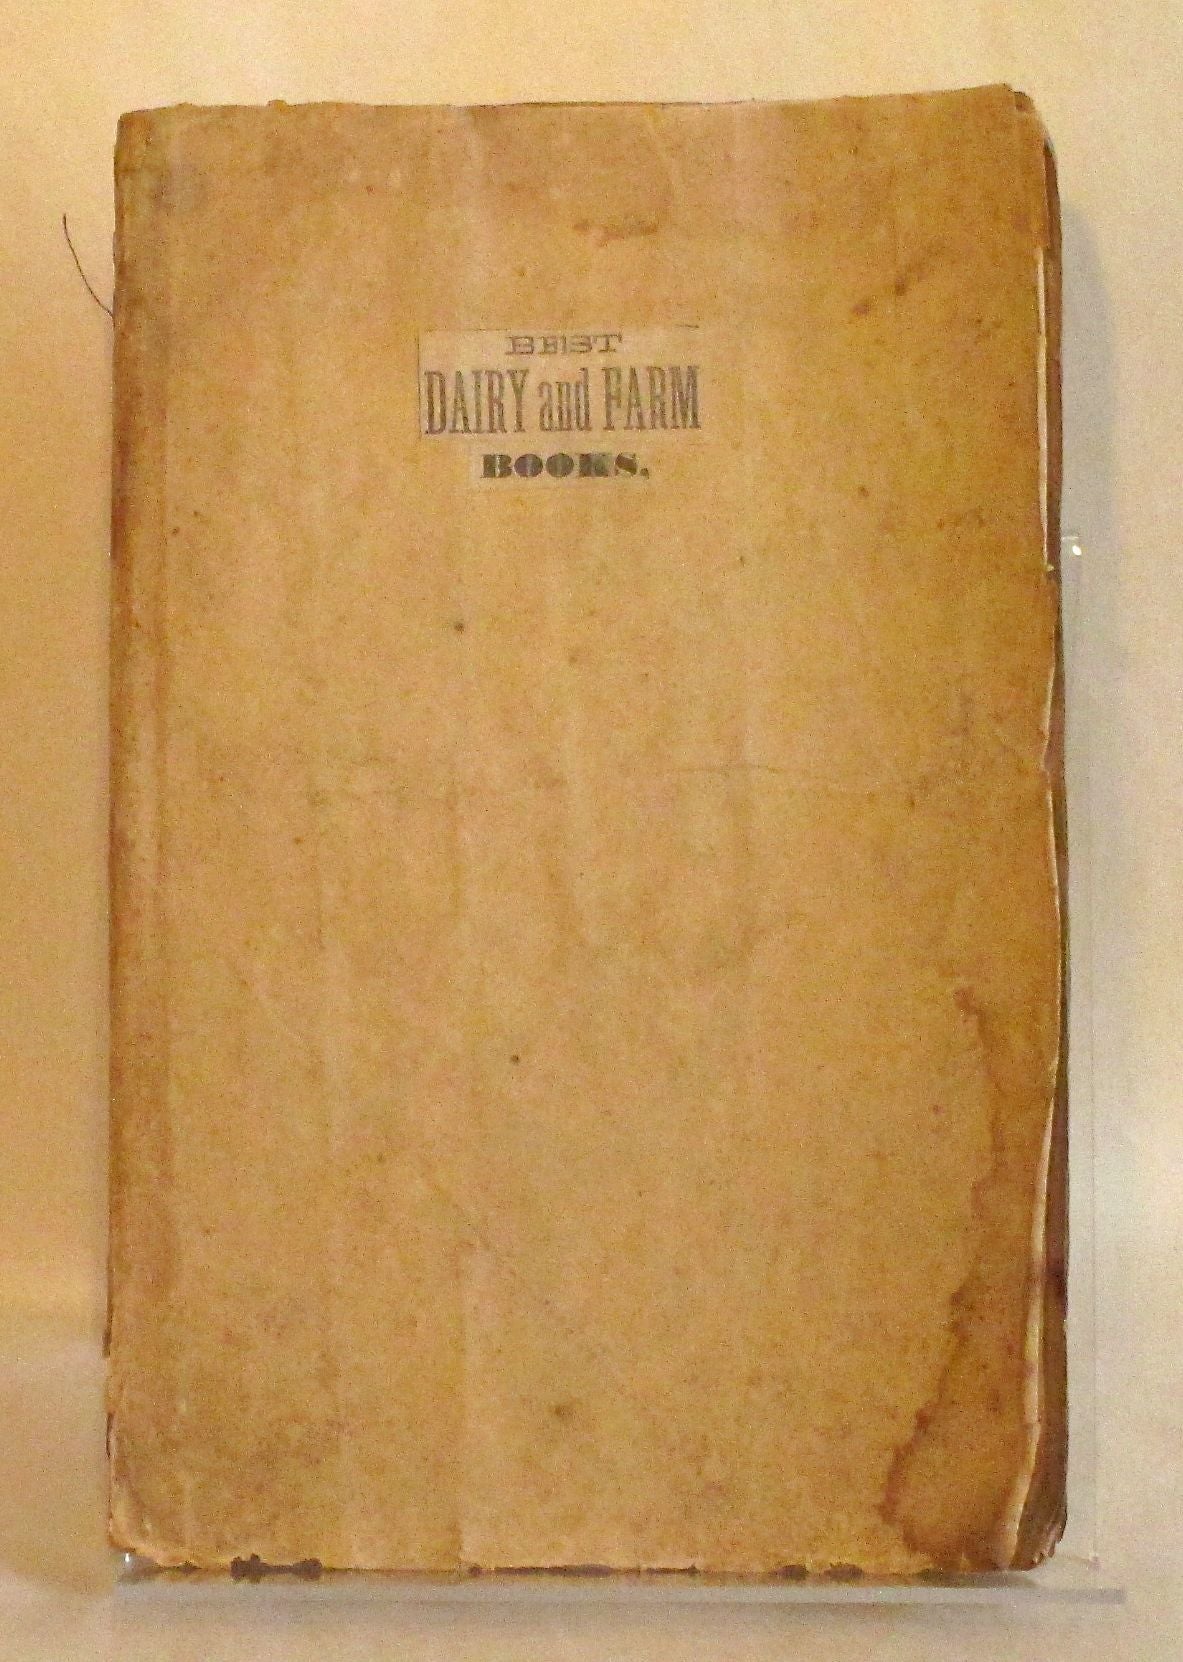 Item #4839 Best Dairy and Farm Books. Scrapbook - Nineteenth Century Dairy Scrapbook.